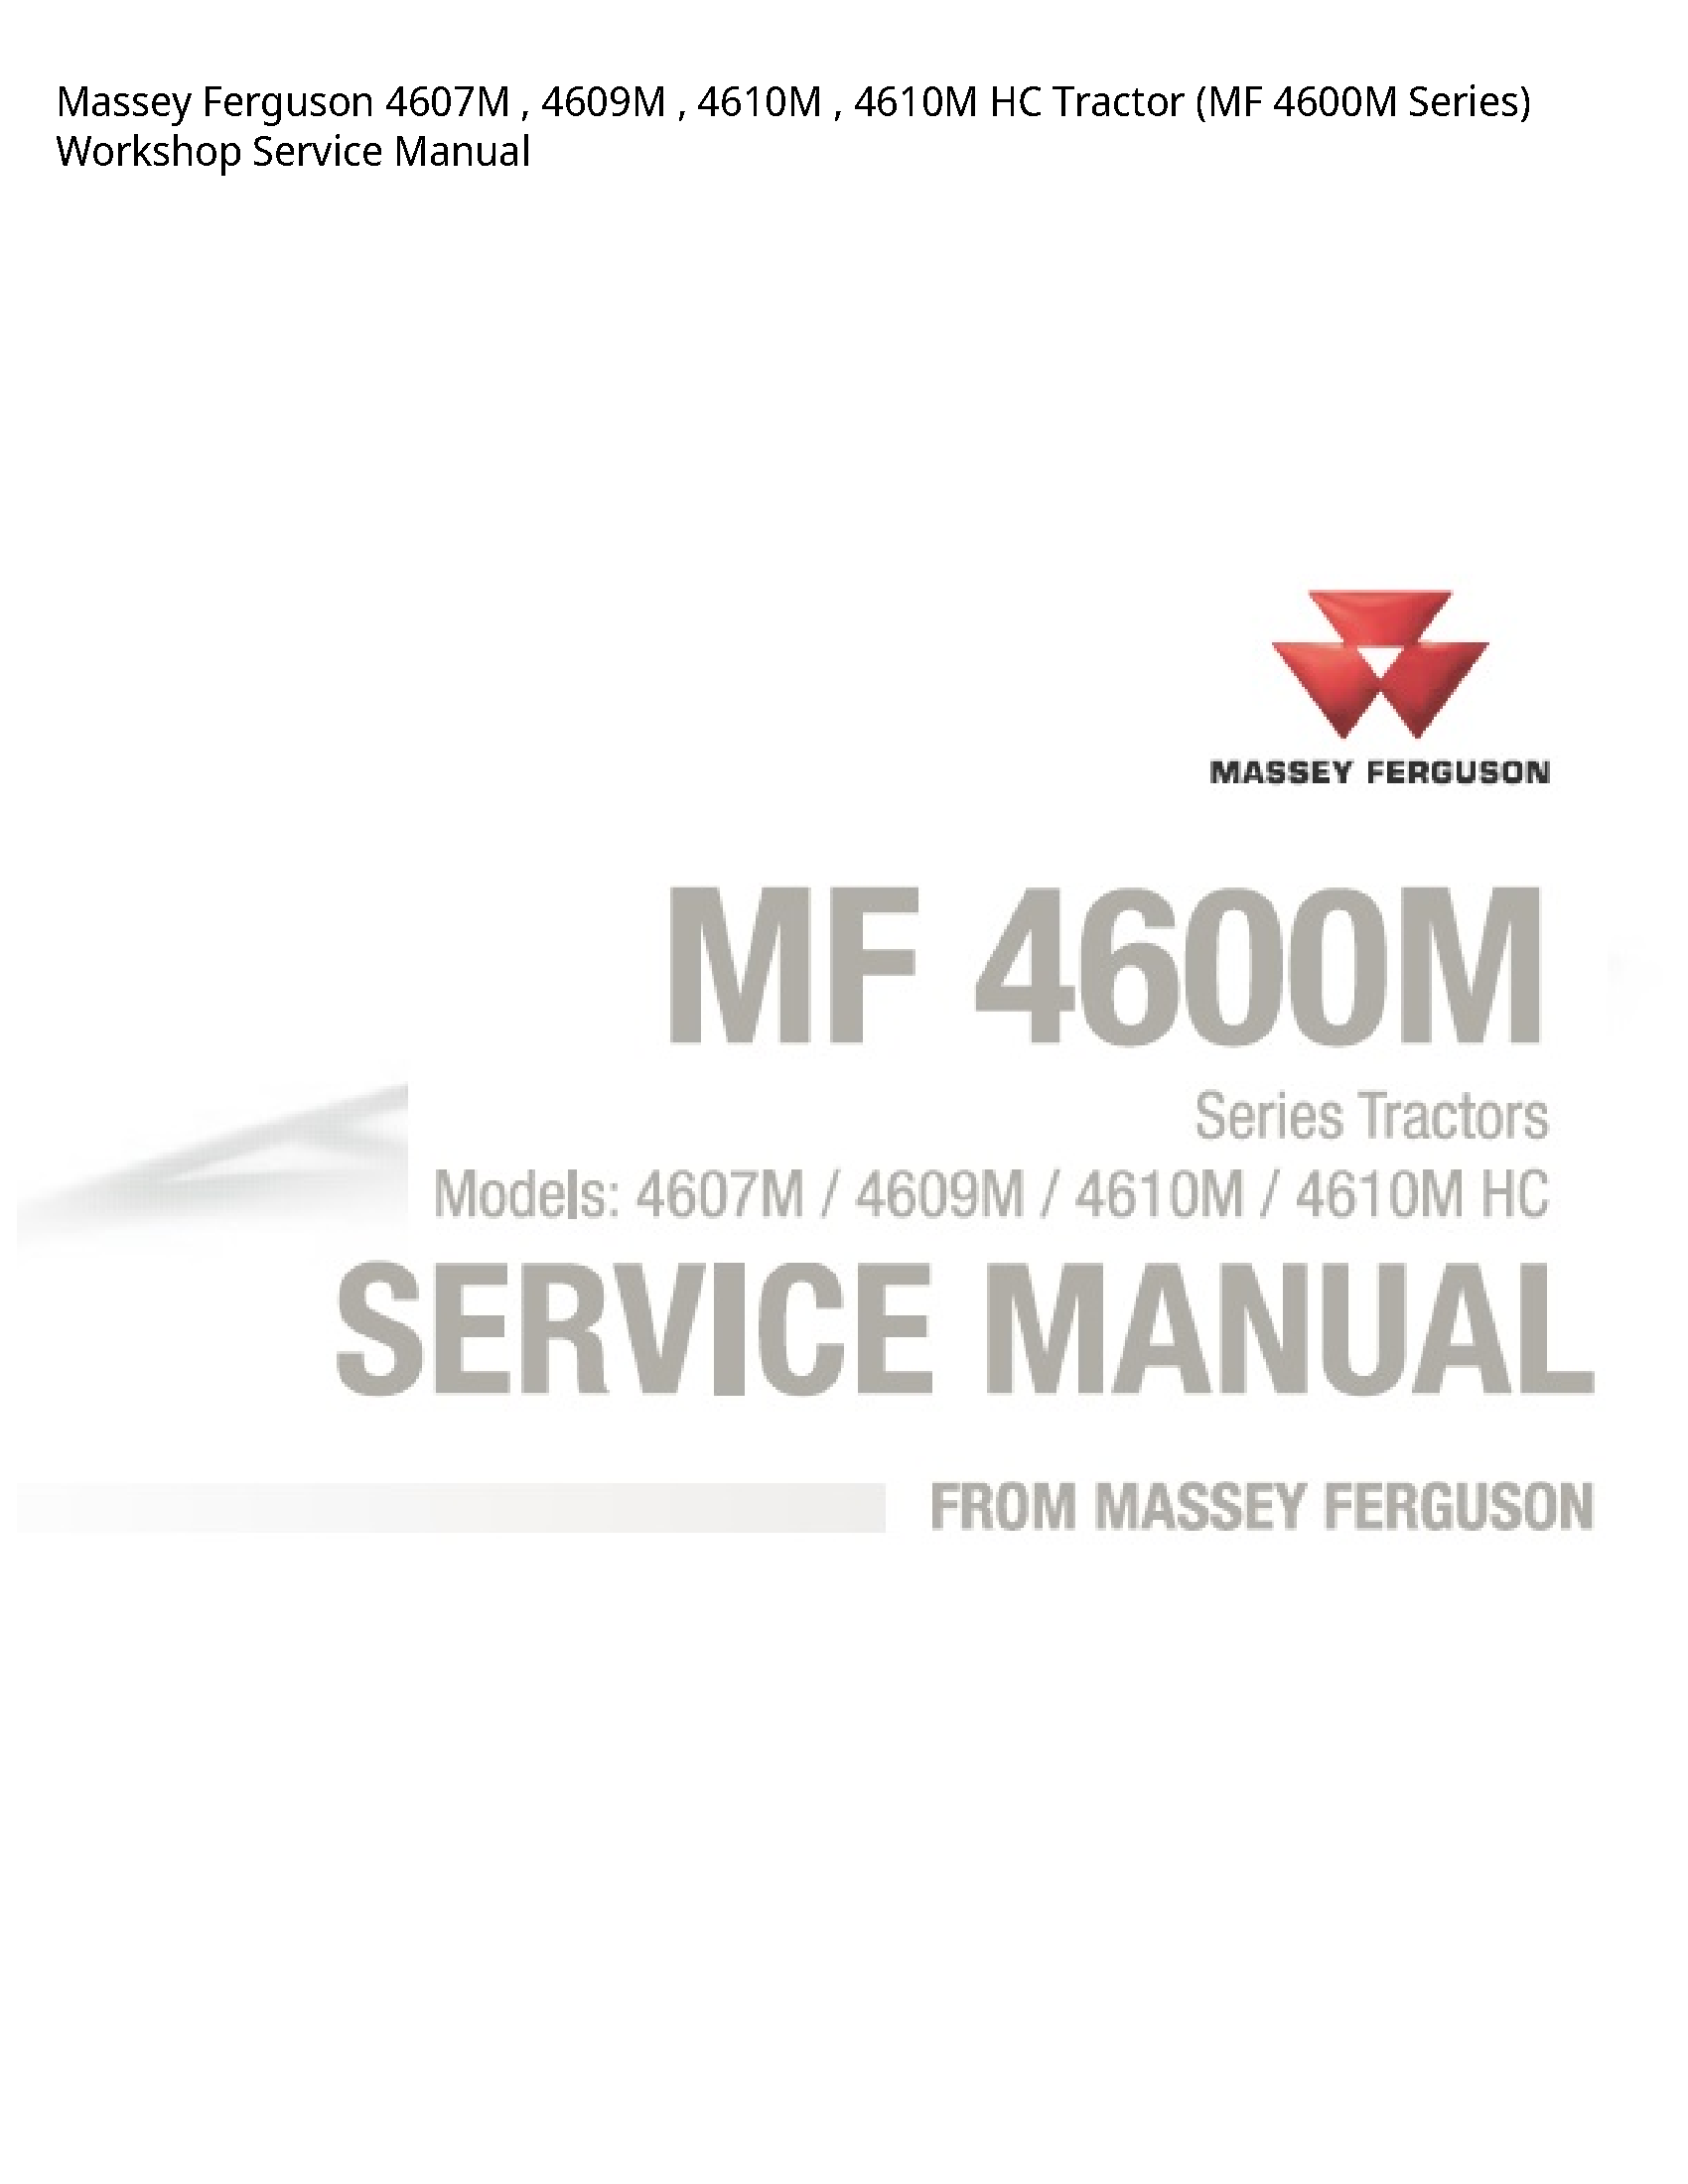 Massey Ferguson 4607M HC Tractor (MF Series) Service manual